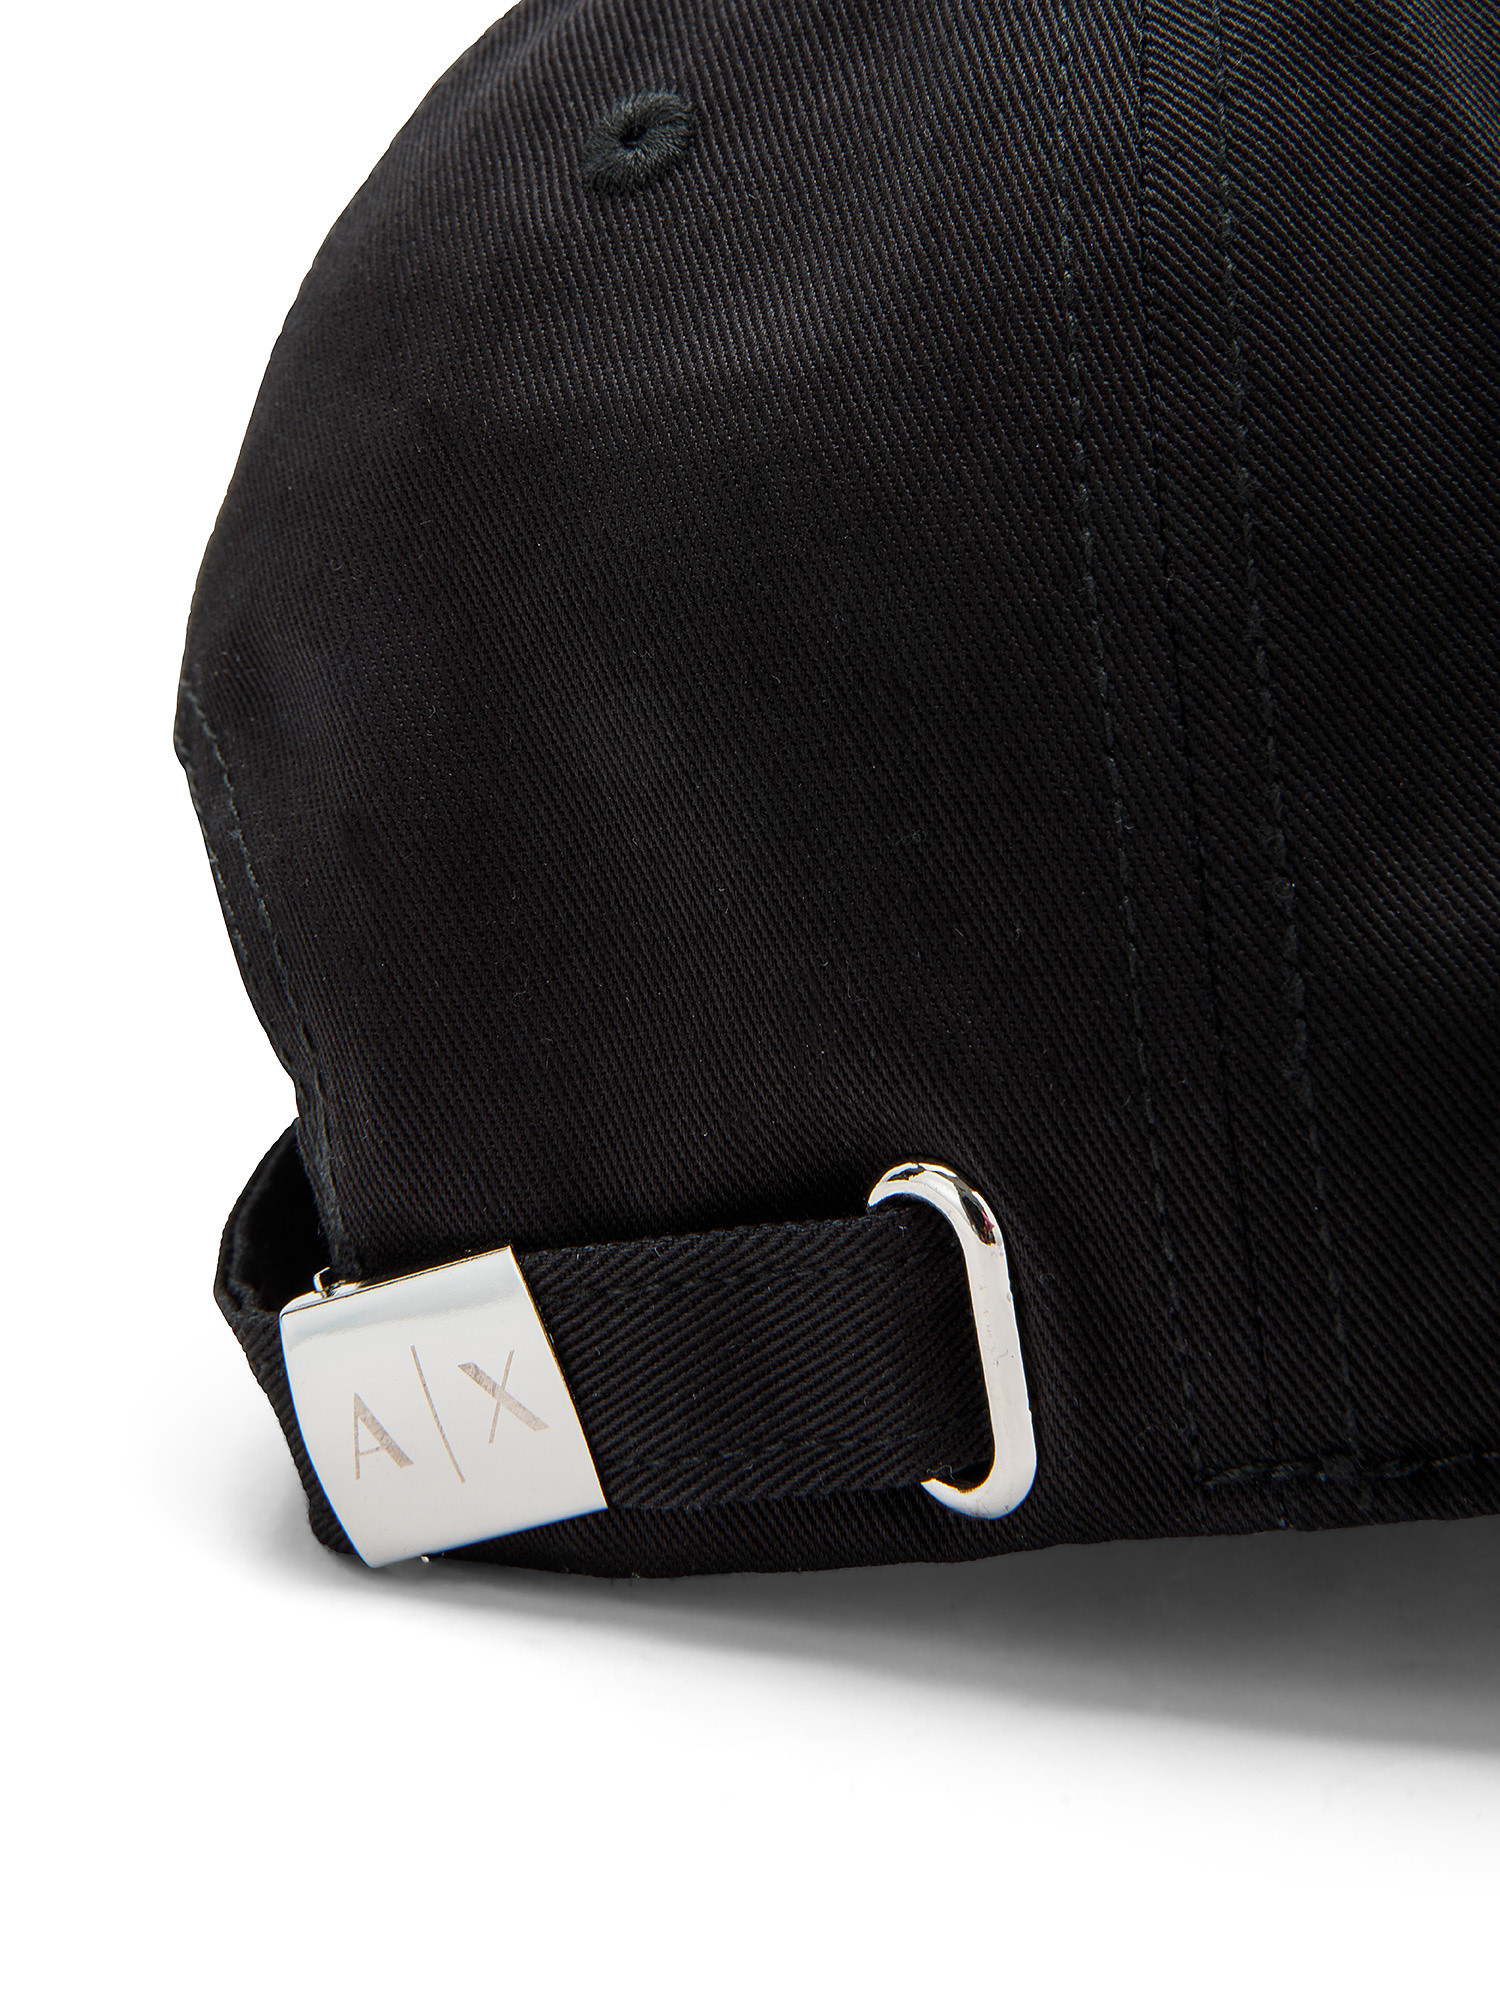 Armani Exchange - Organic cotton cap with visor, Black, large image number 1